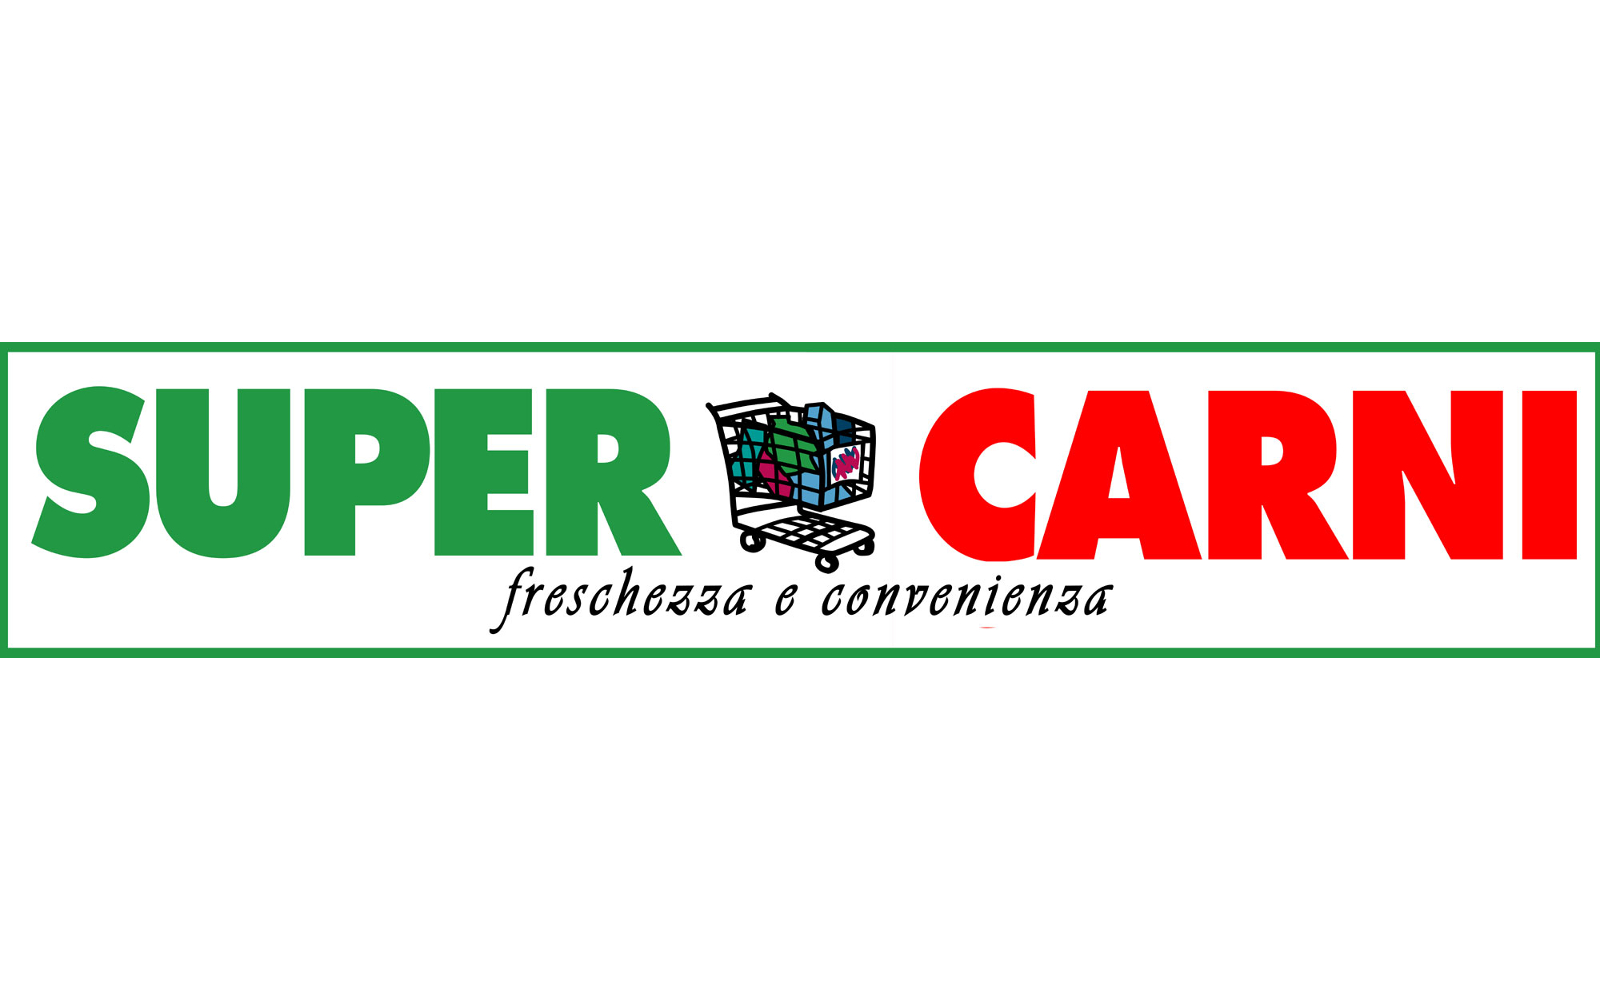 Super Carni - Via Brigata Regina, 95